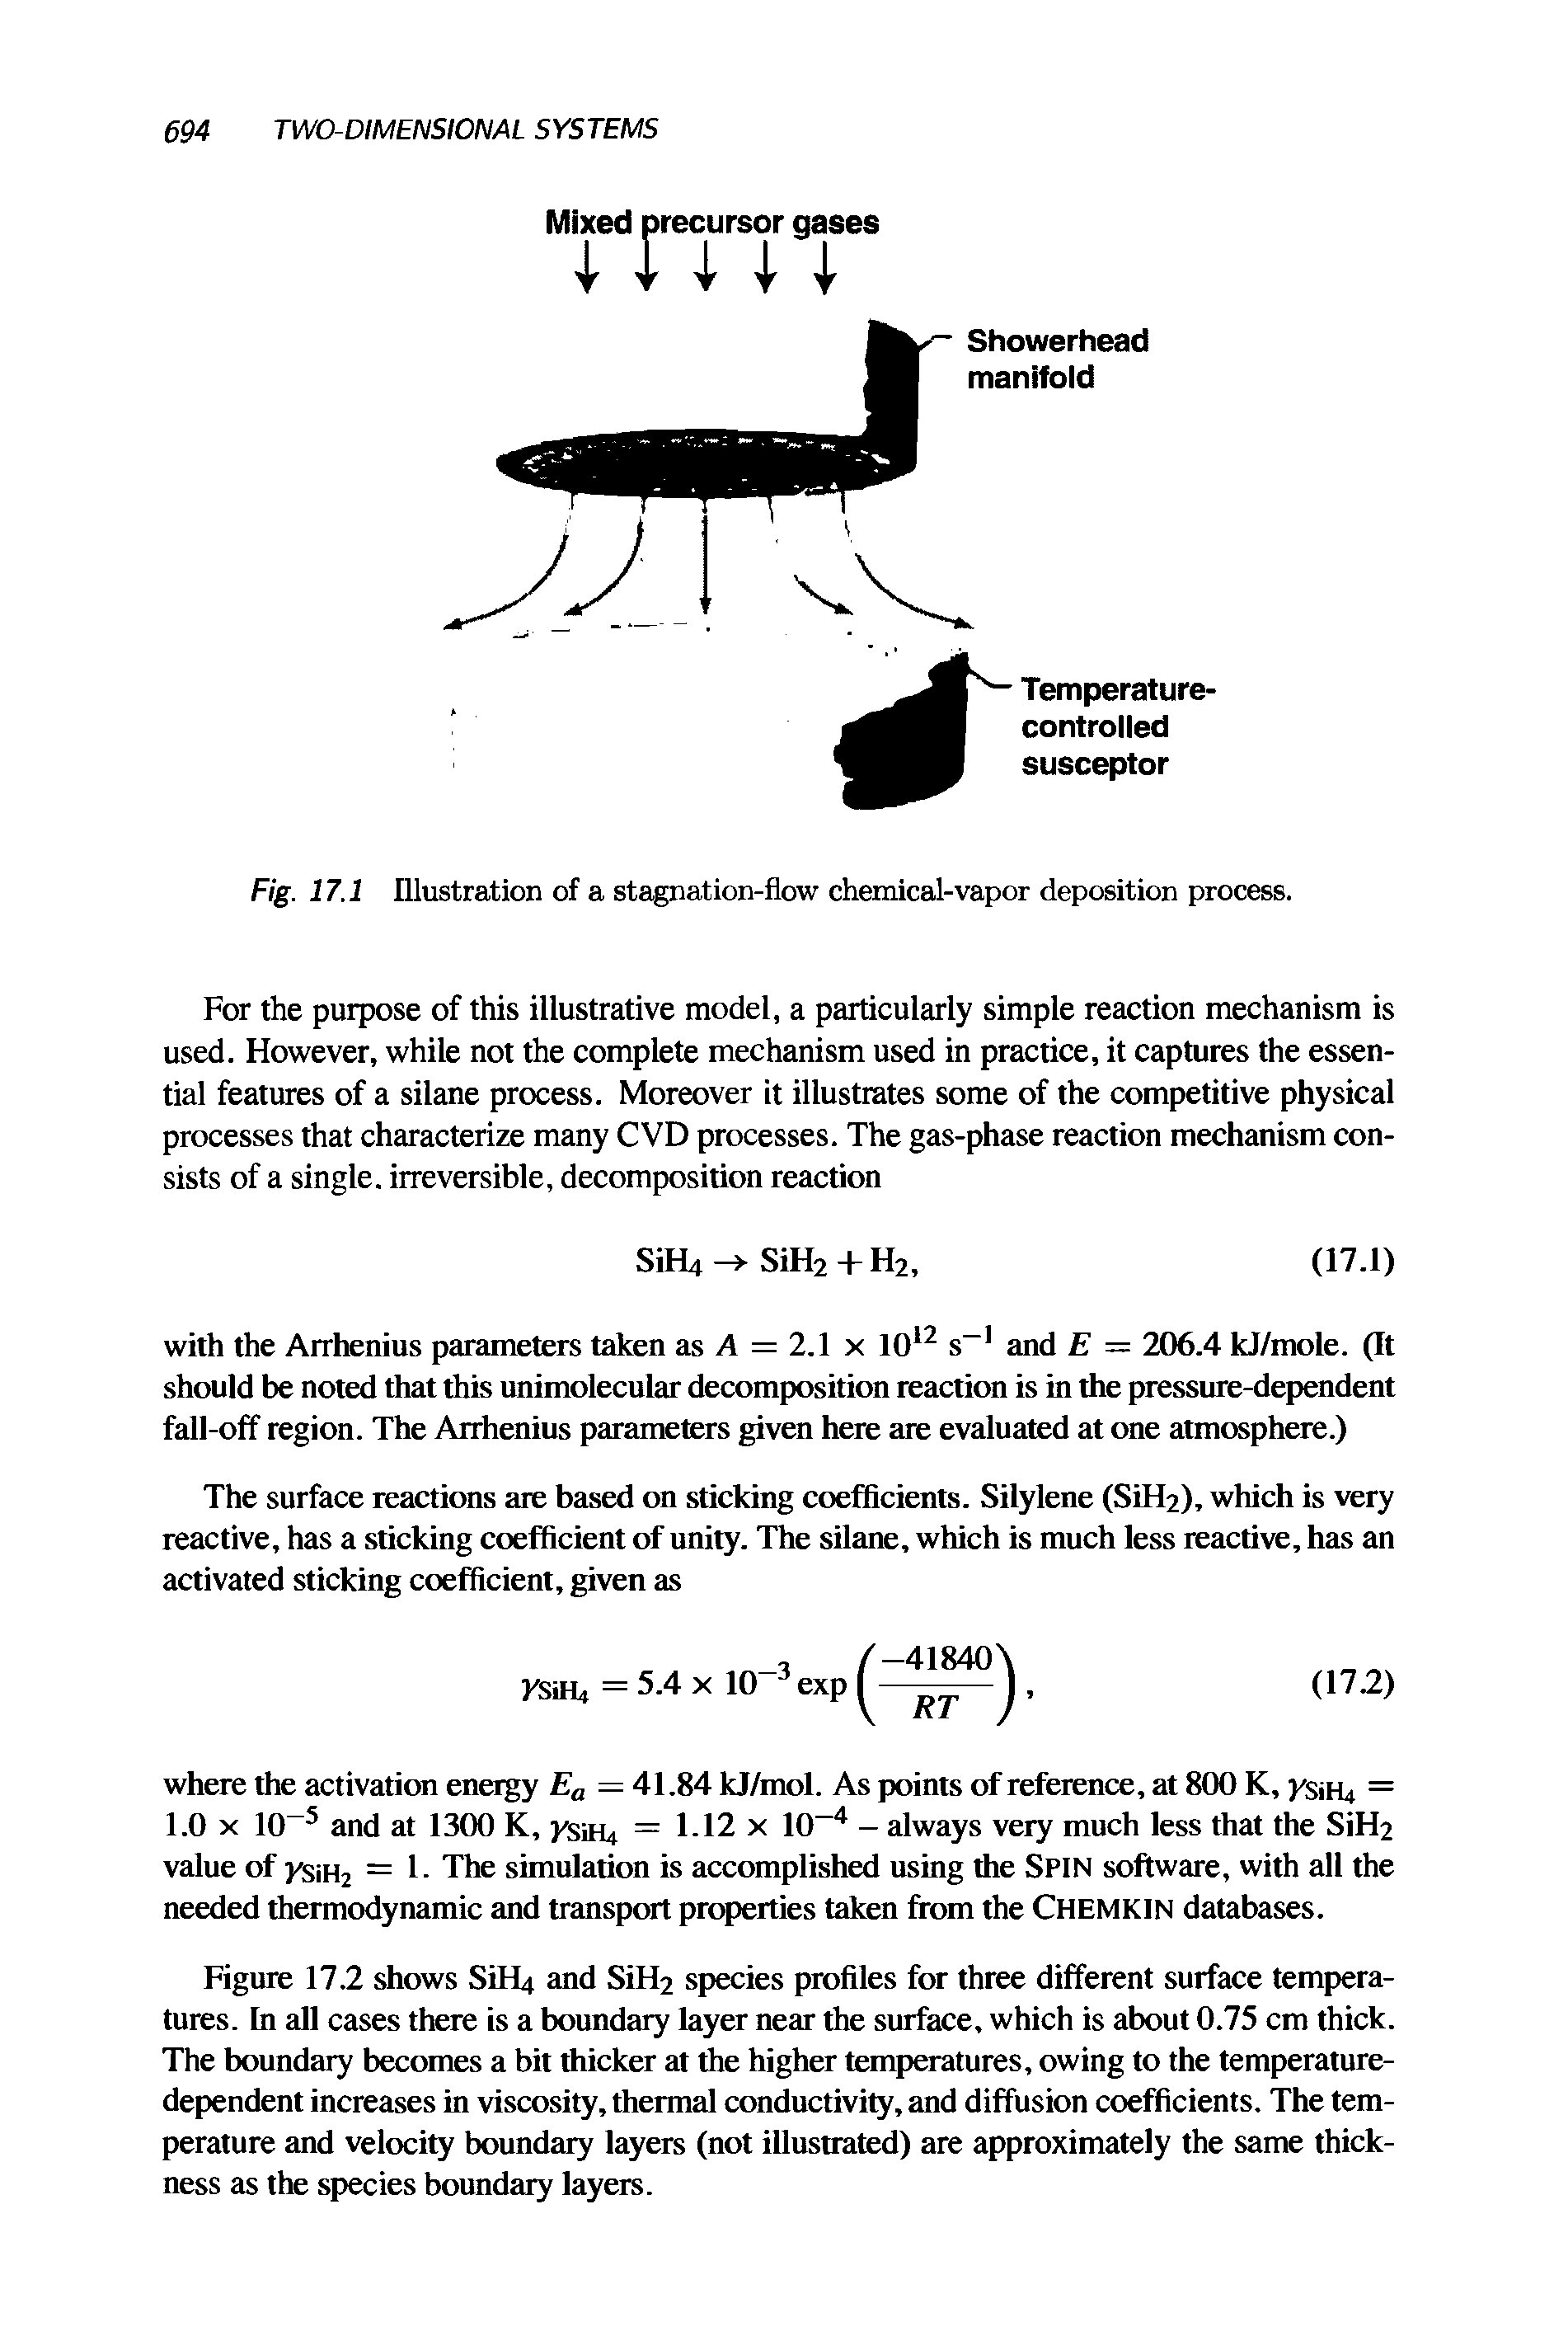 Fig. 17.1 Illustration of a stagnation-flow chemical-vapor deposition process.